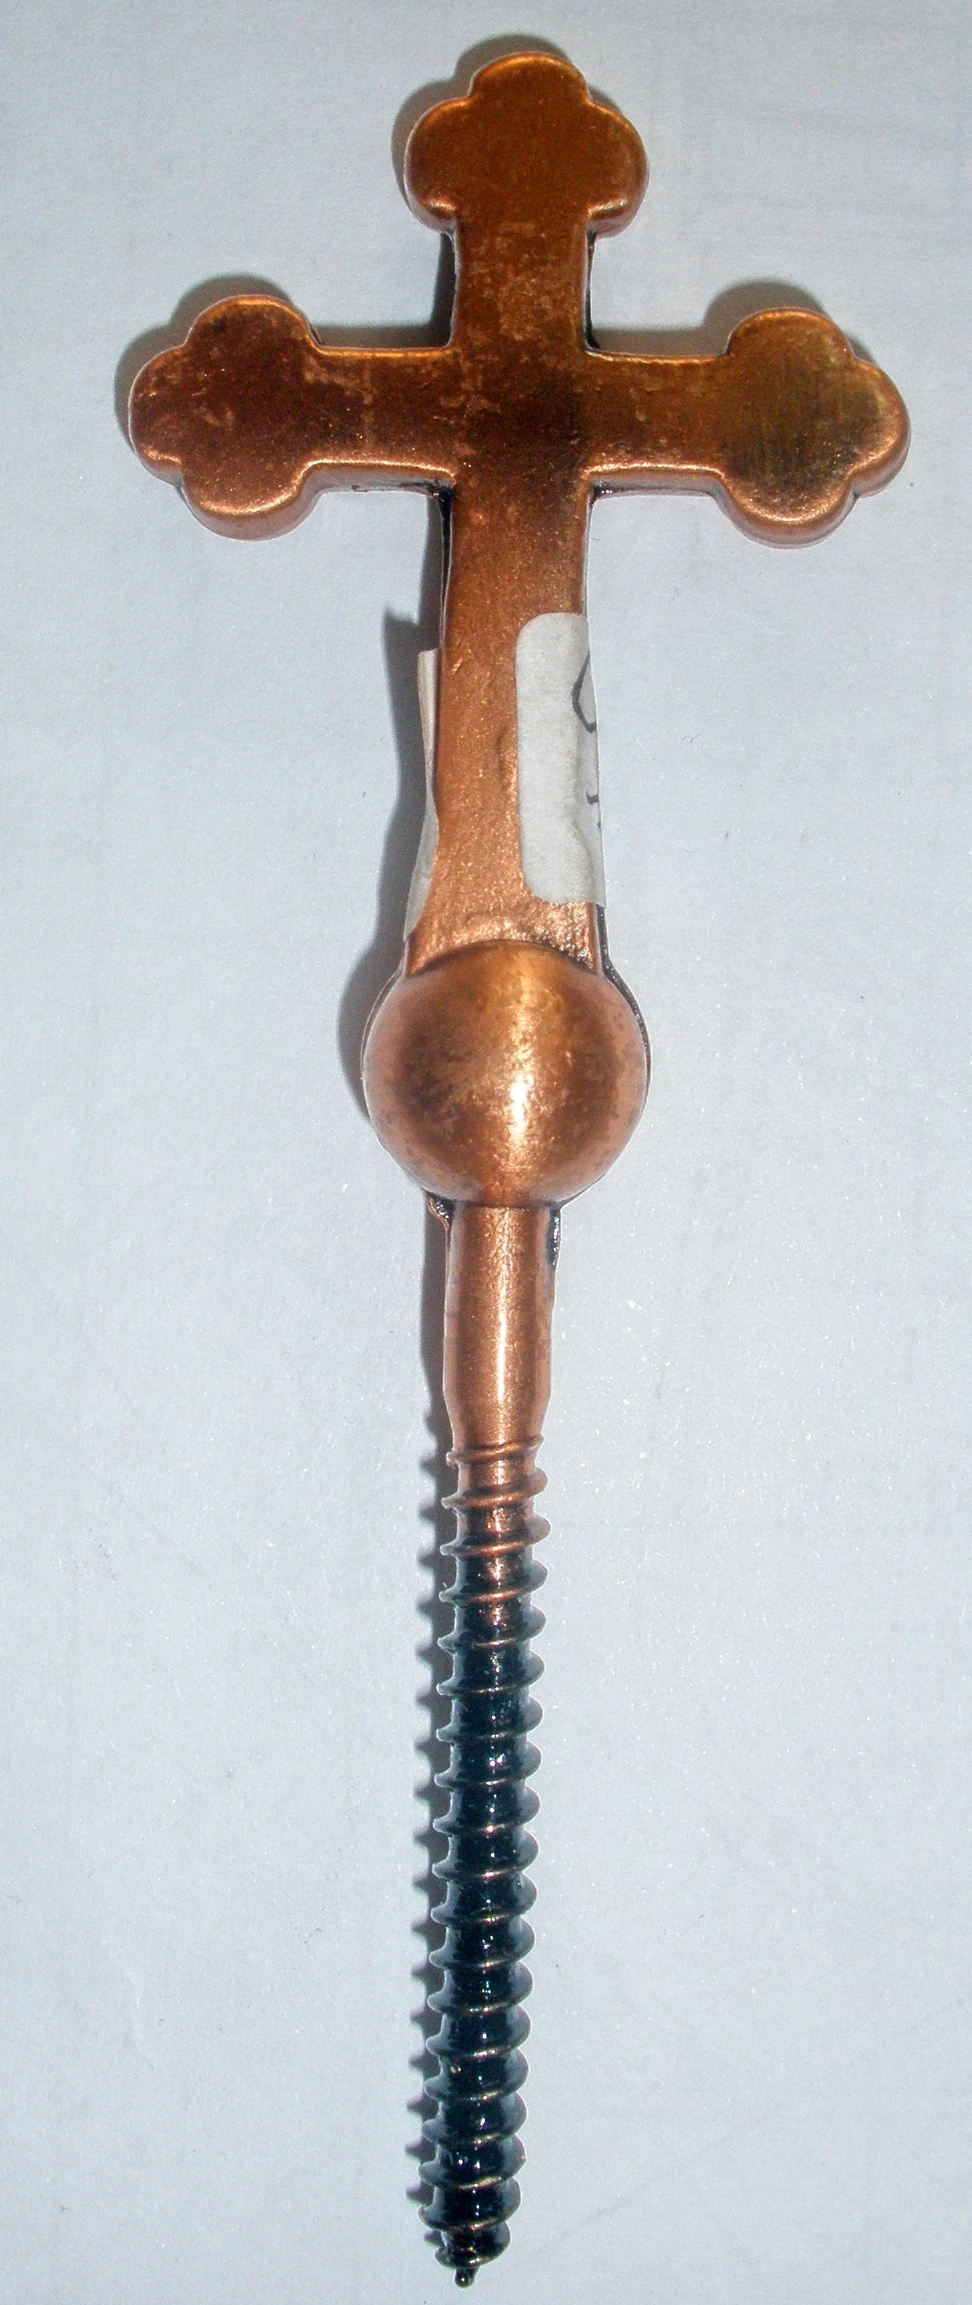 Coffin fittings and cross type lid screw 8022 in zamak material and metal screws